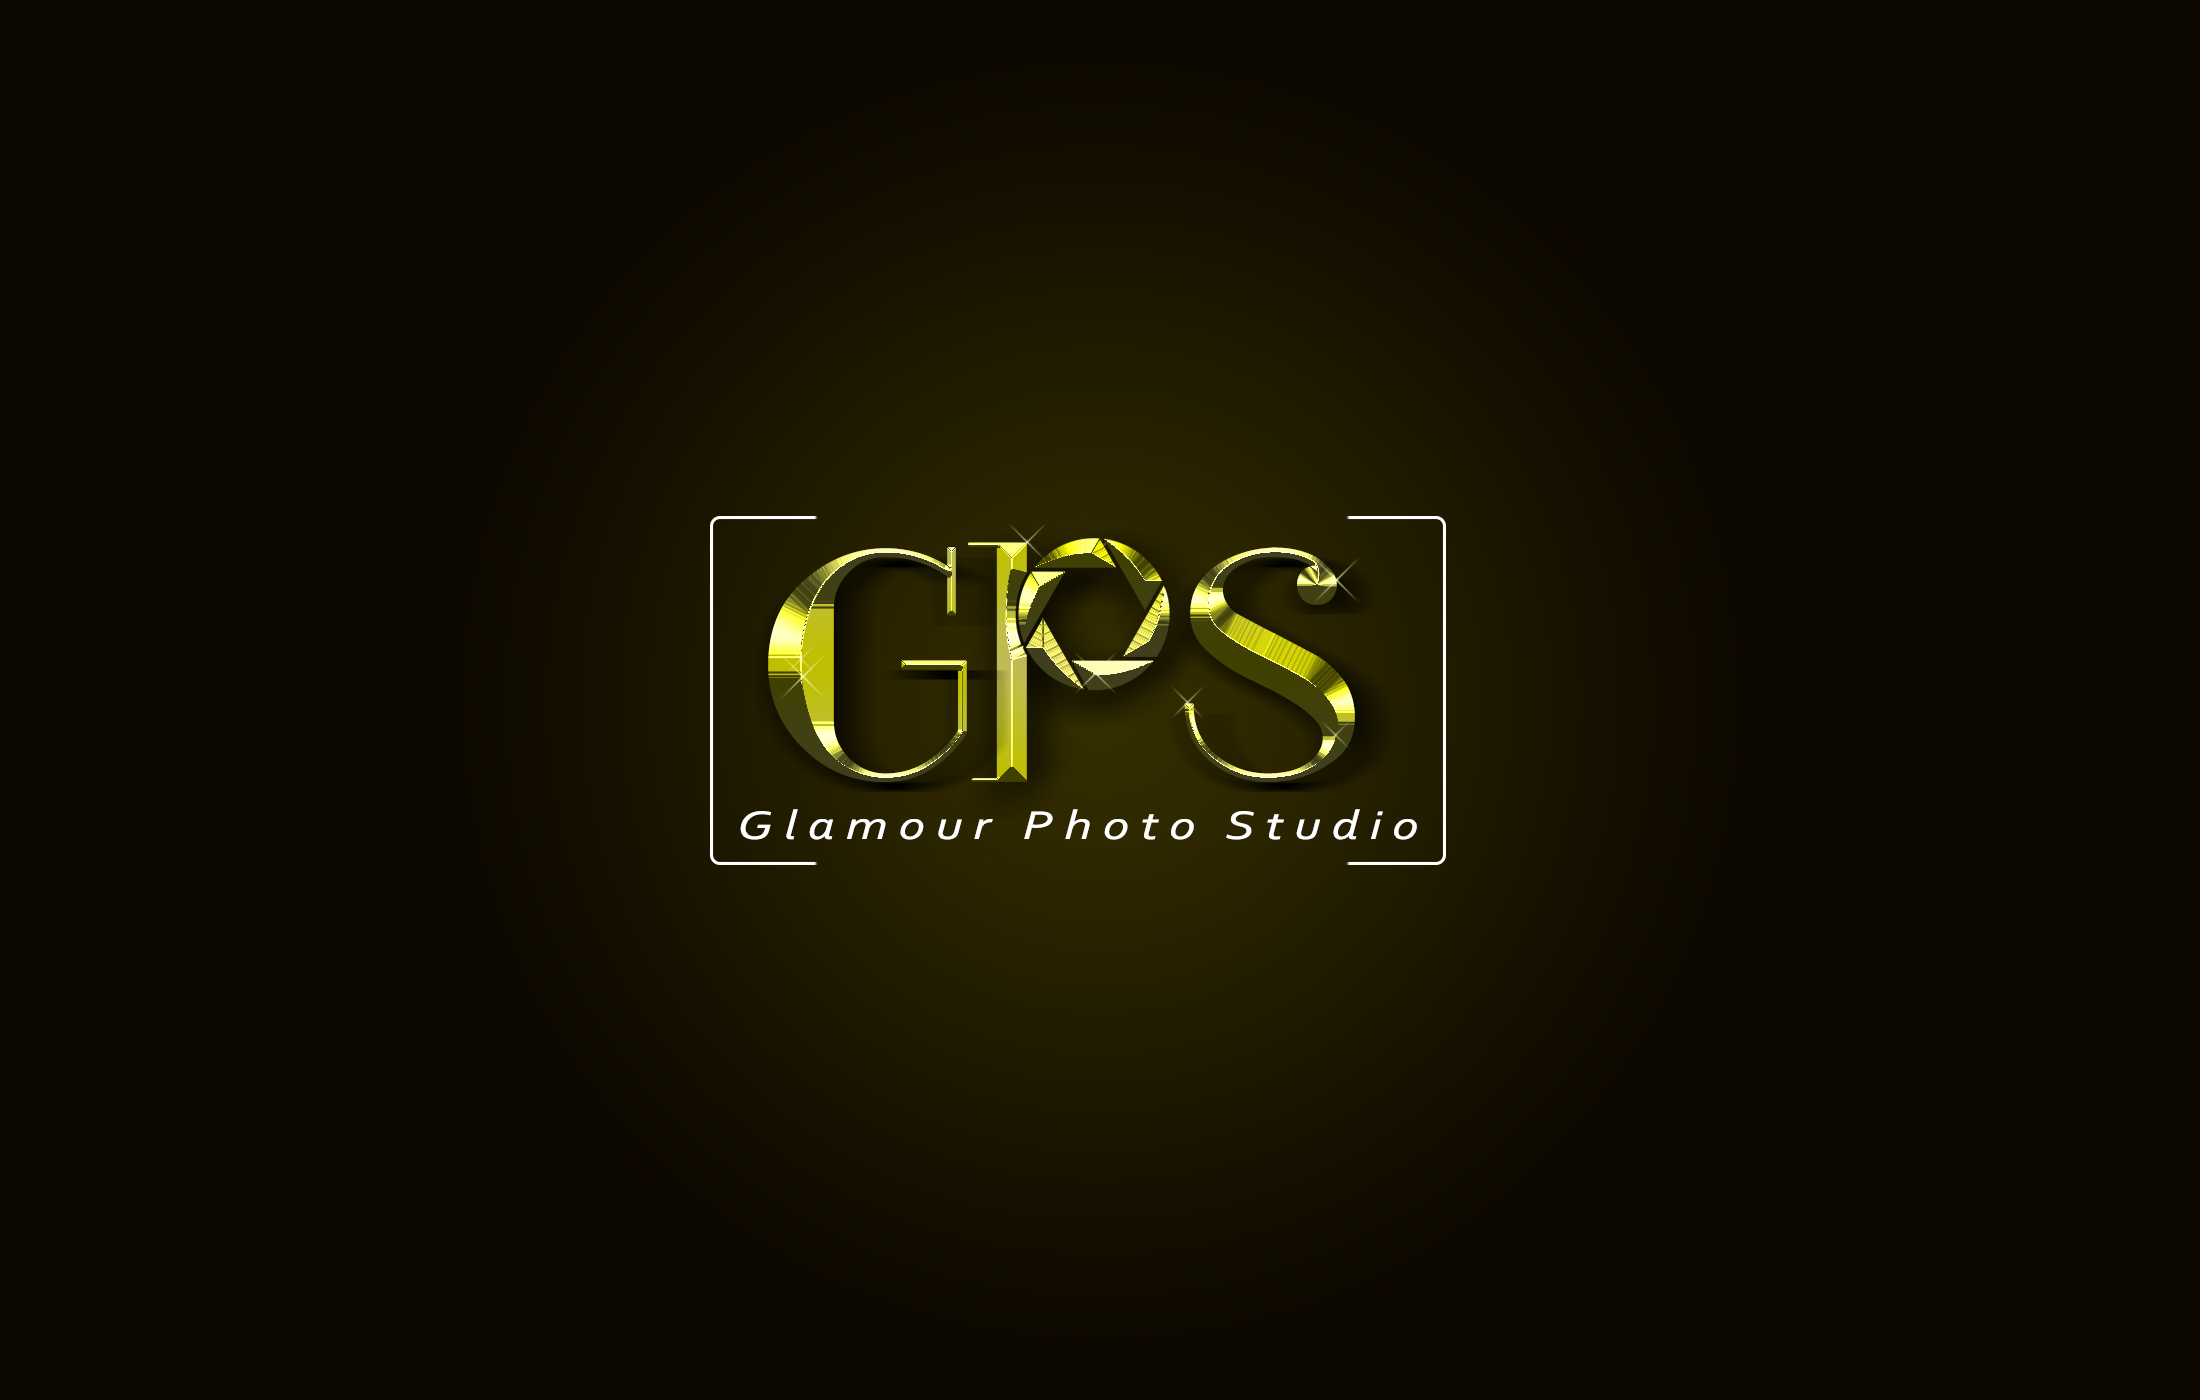 Glamour Photo Studio